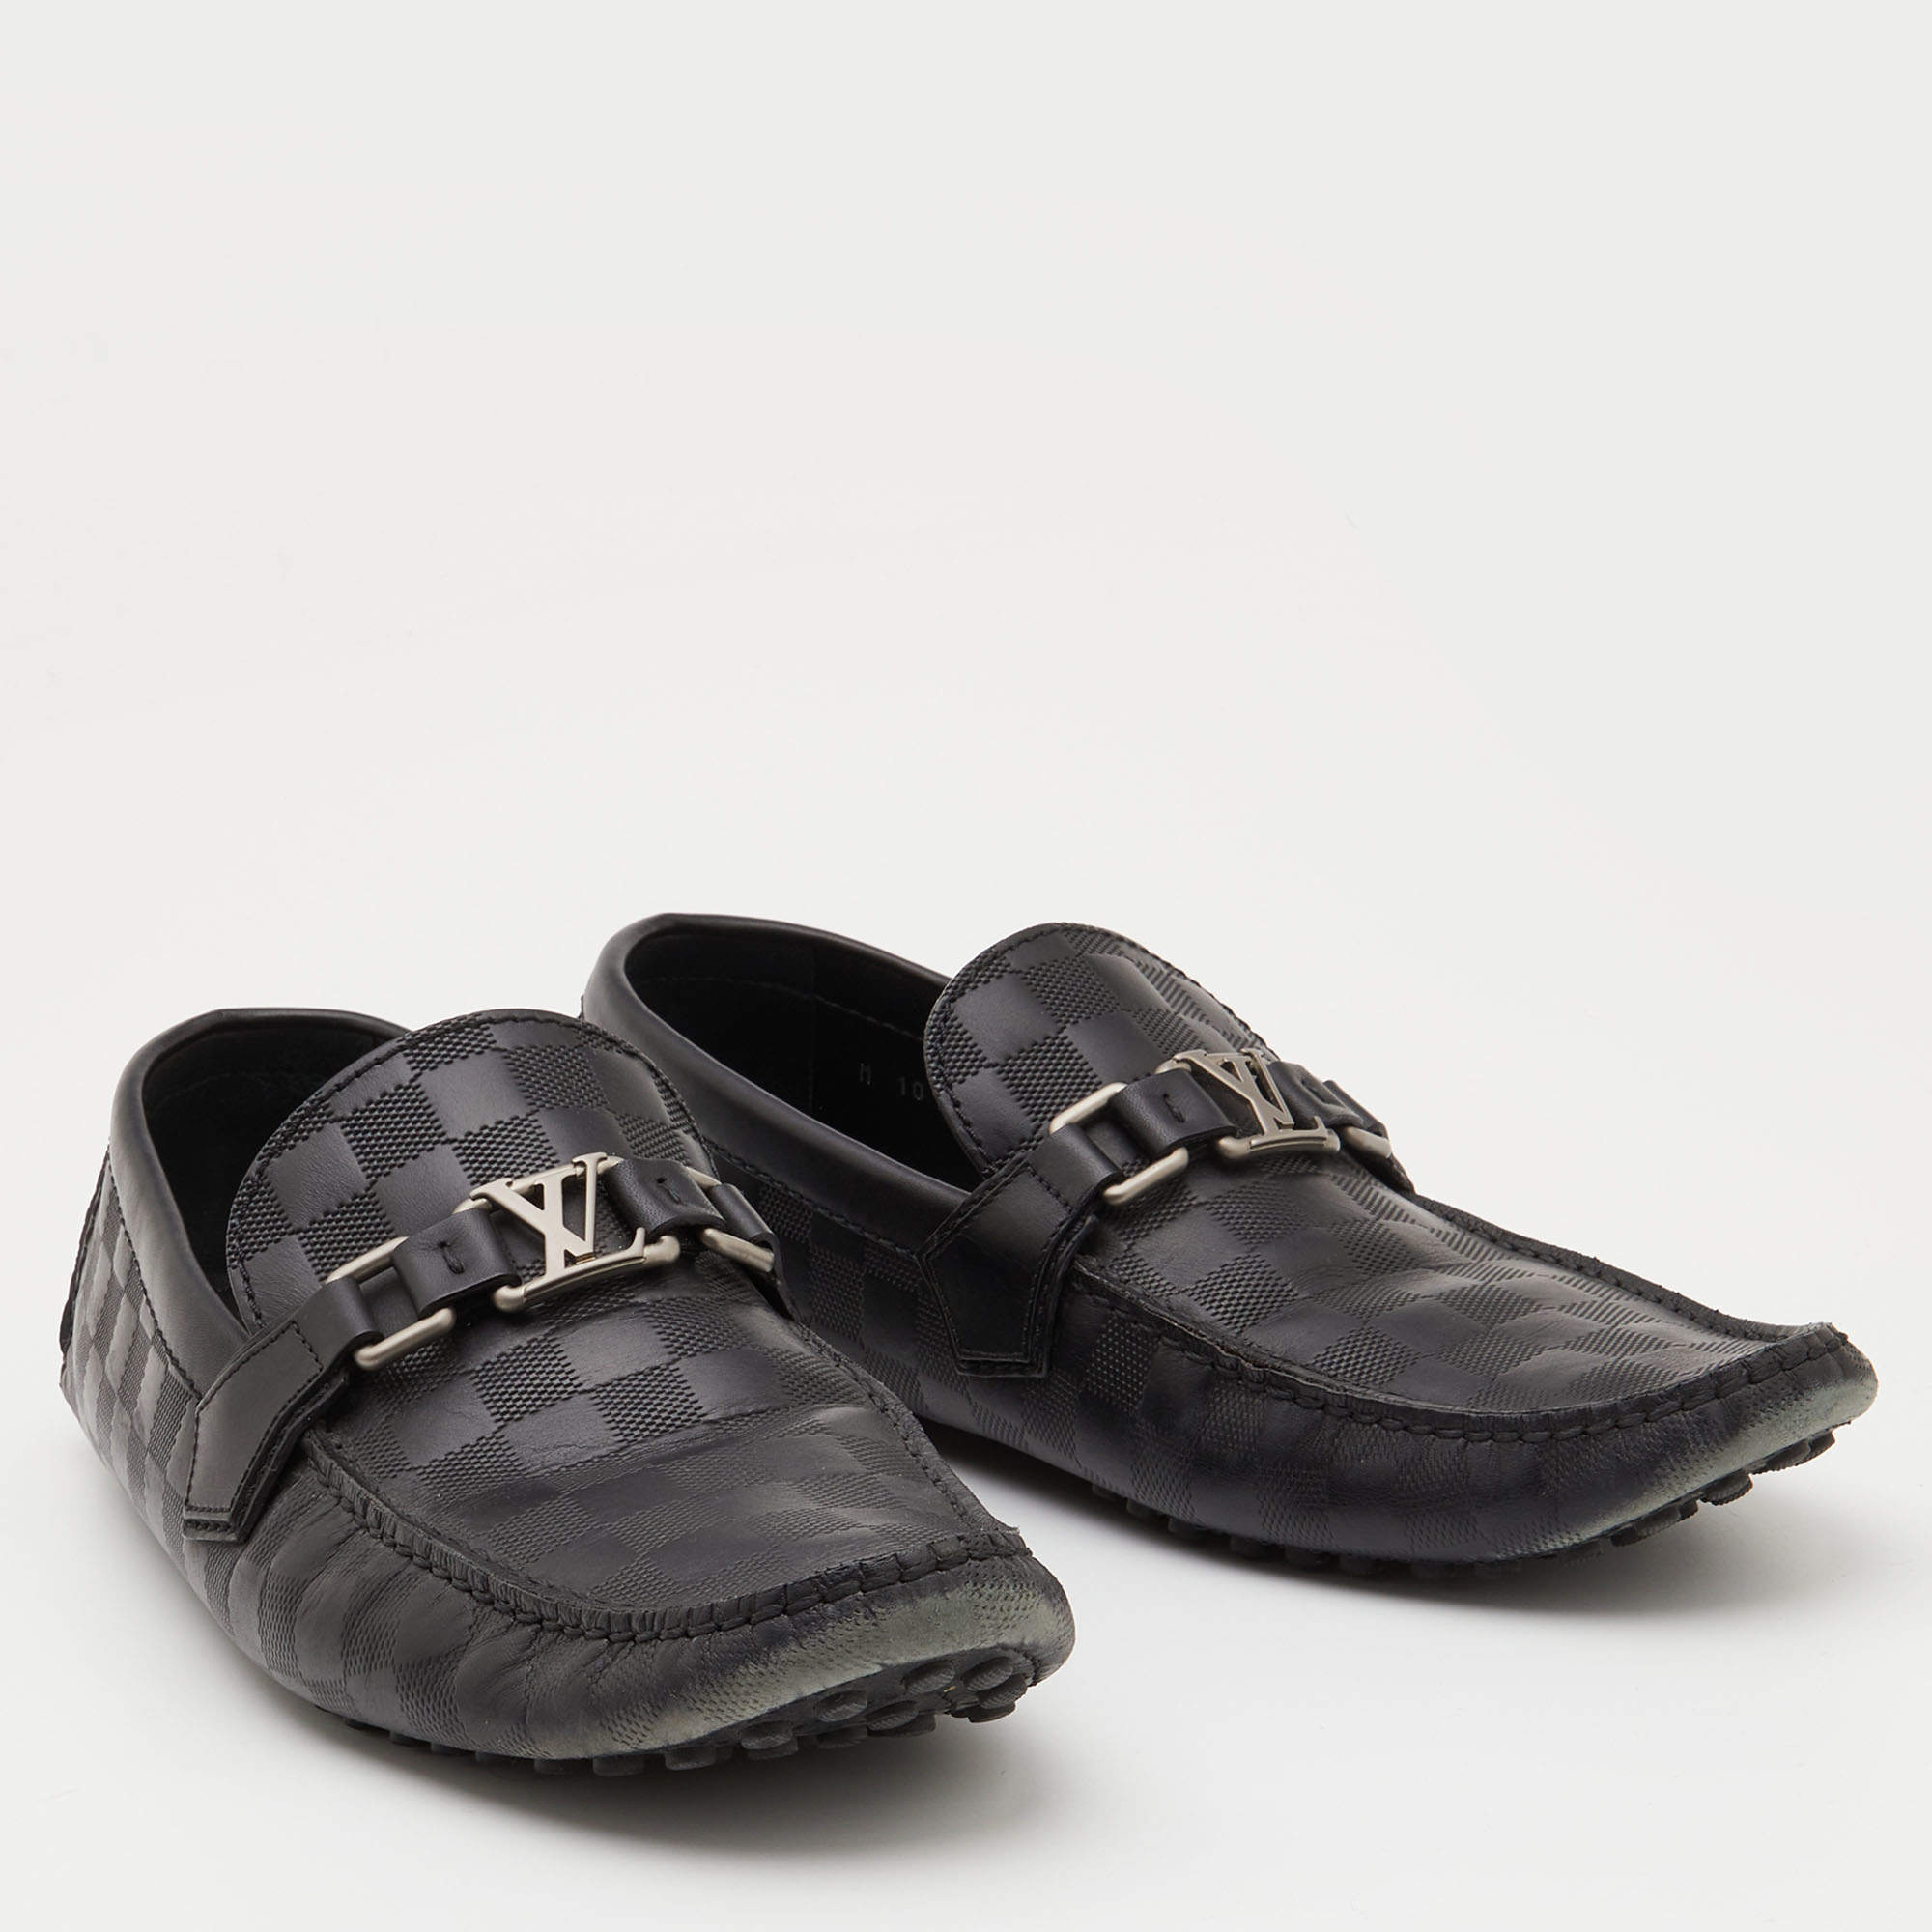 Louis Vuitton - Hockenheim Driving Shoes - Loafers - Size: Shoes / EU 42.5  in Turkey